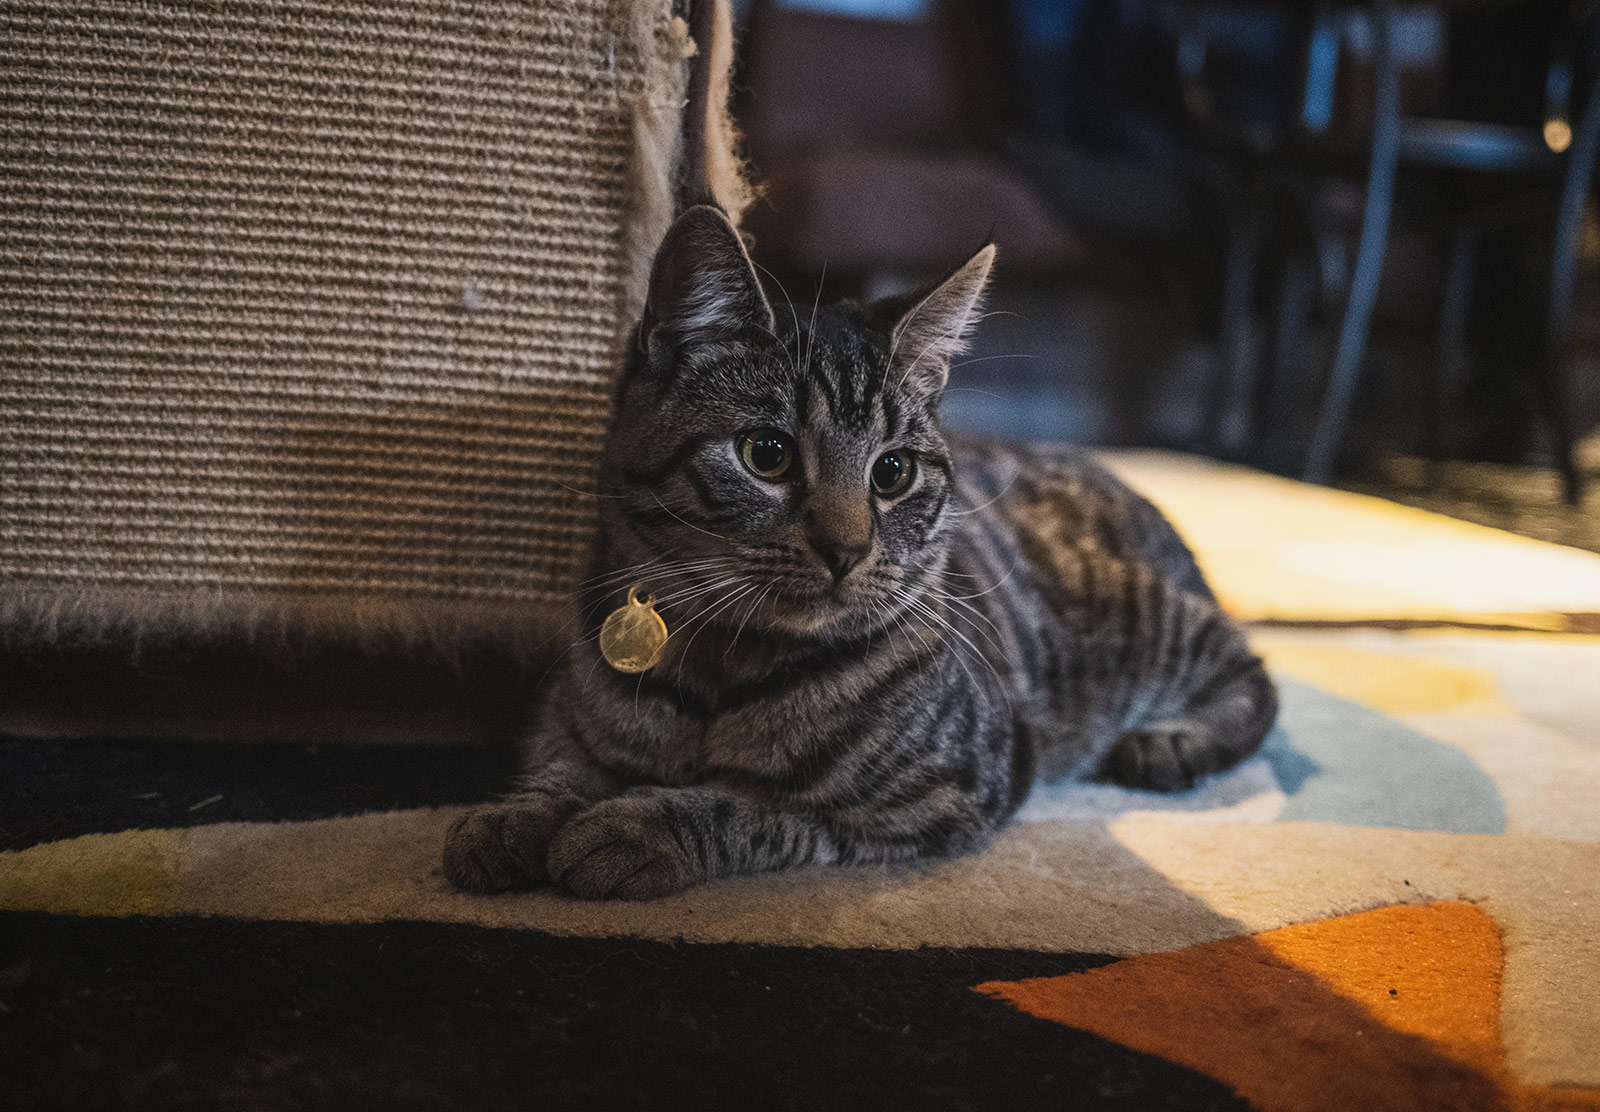 Cat sitting on carpet